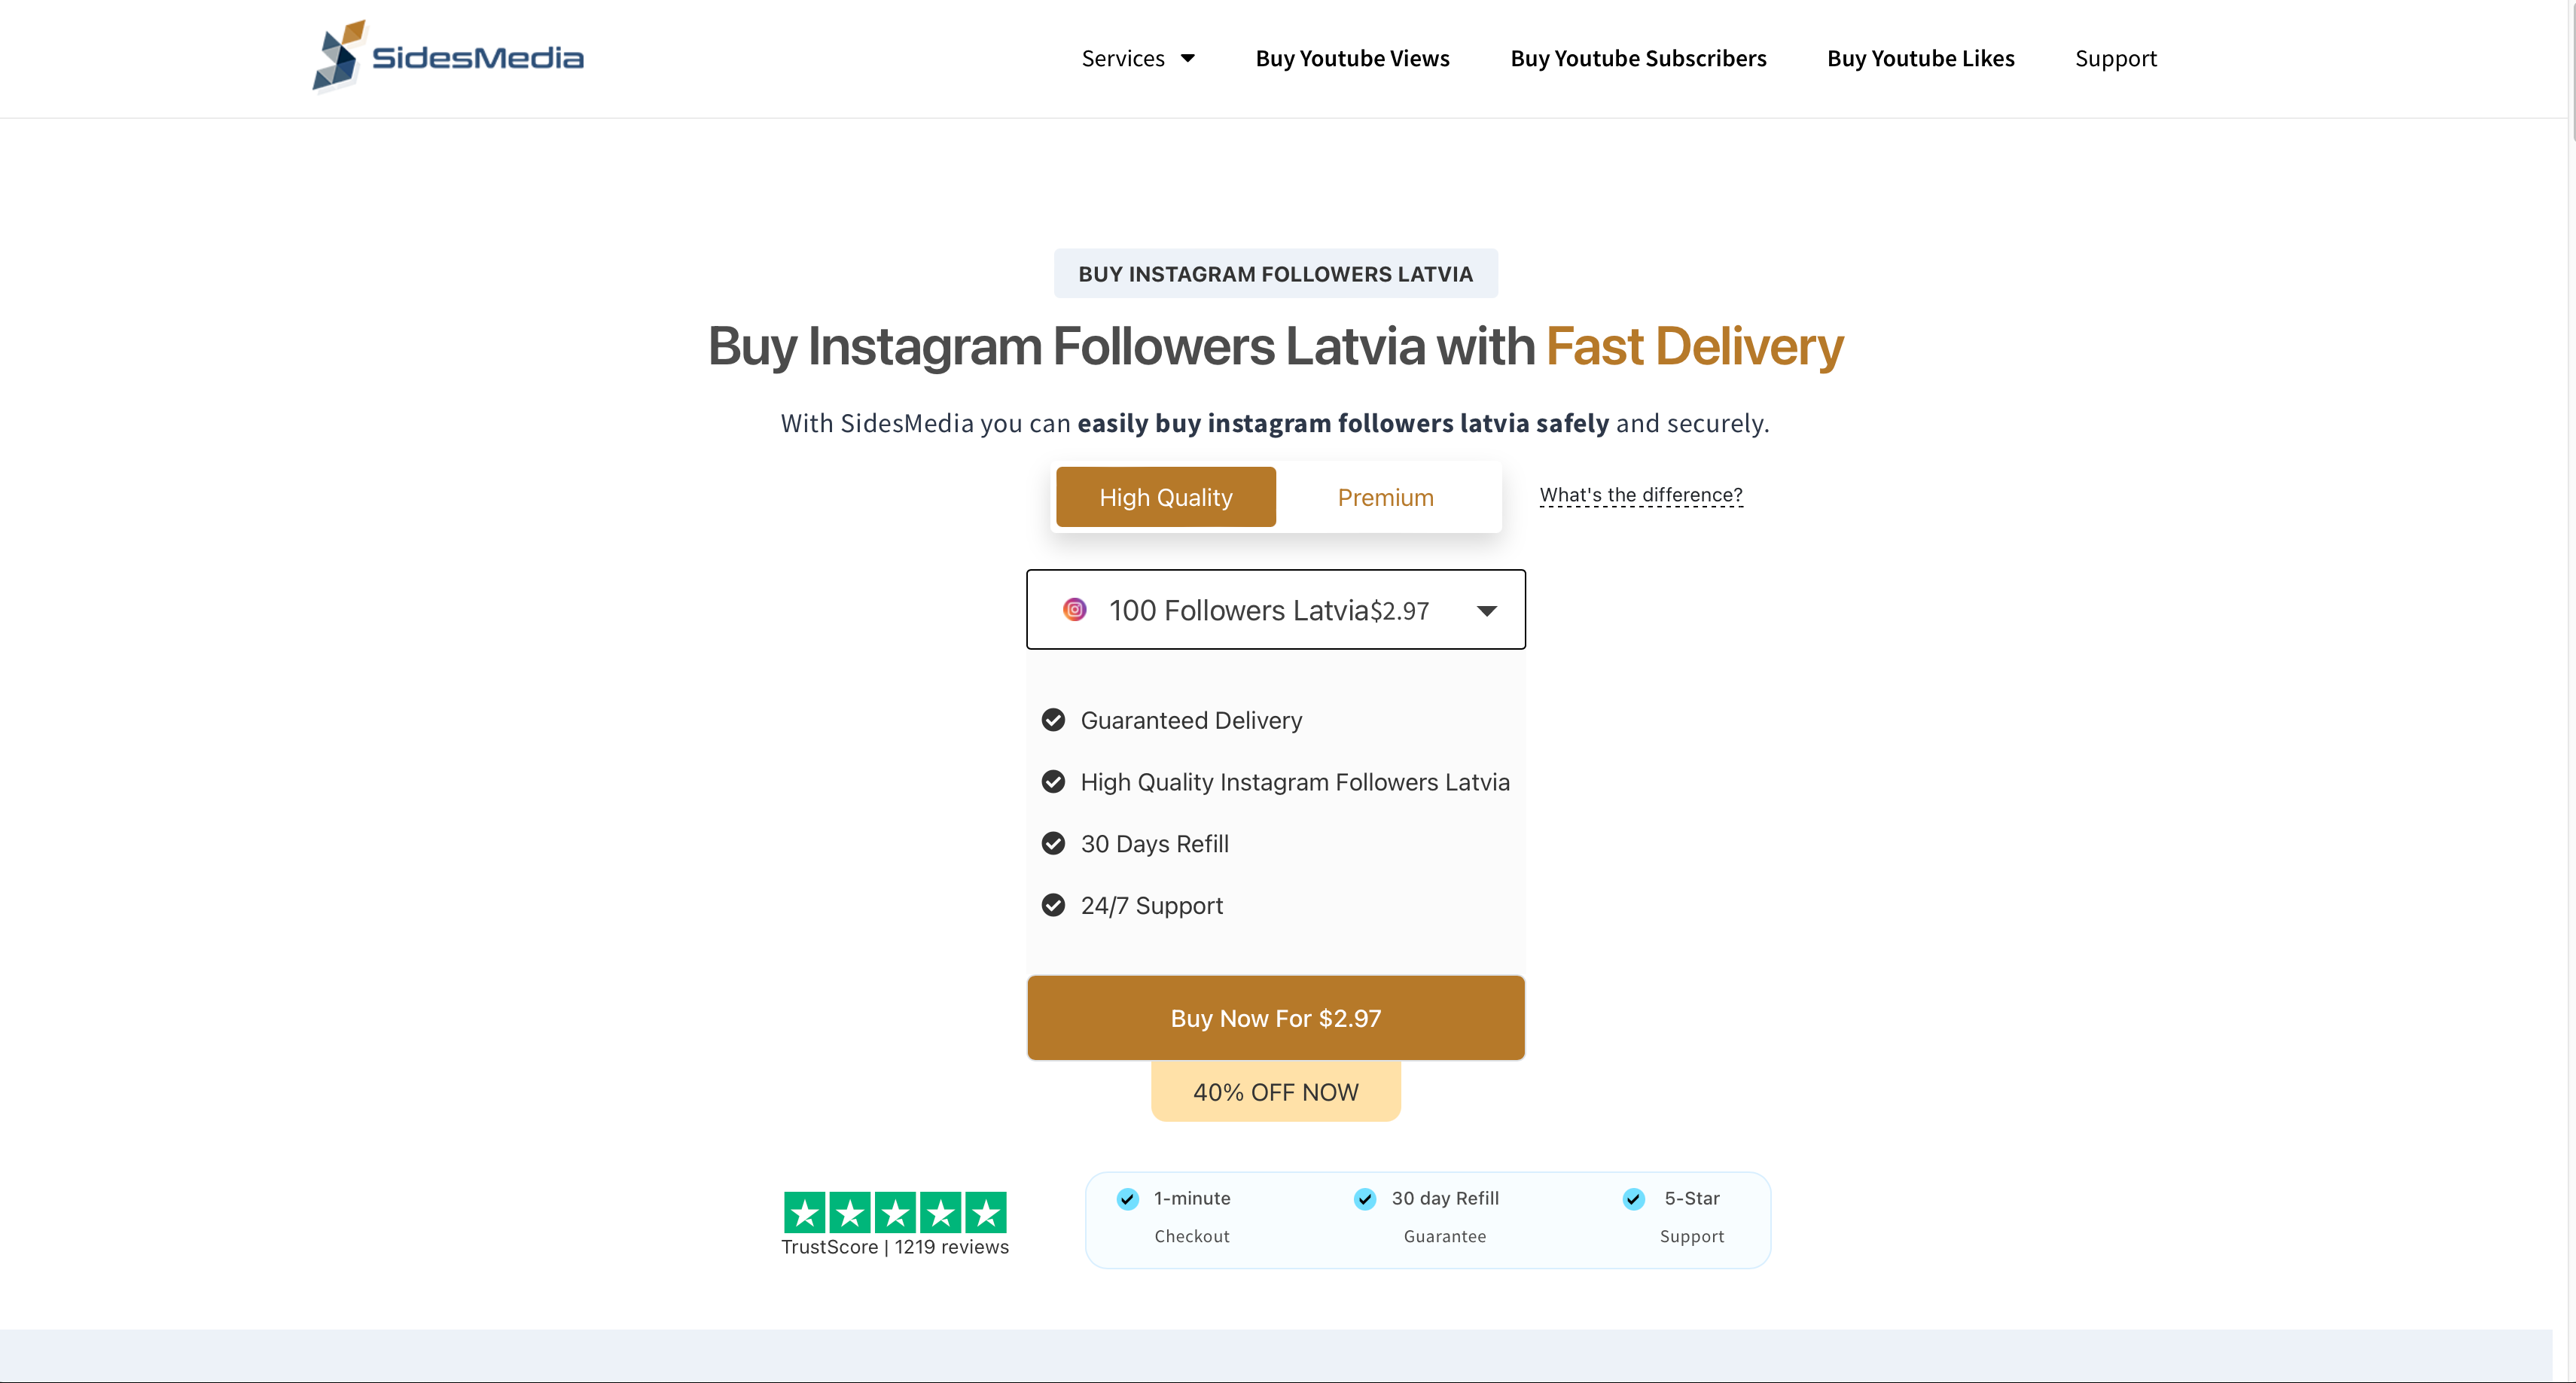 sidesmedia buy instagram followers latvia page